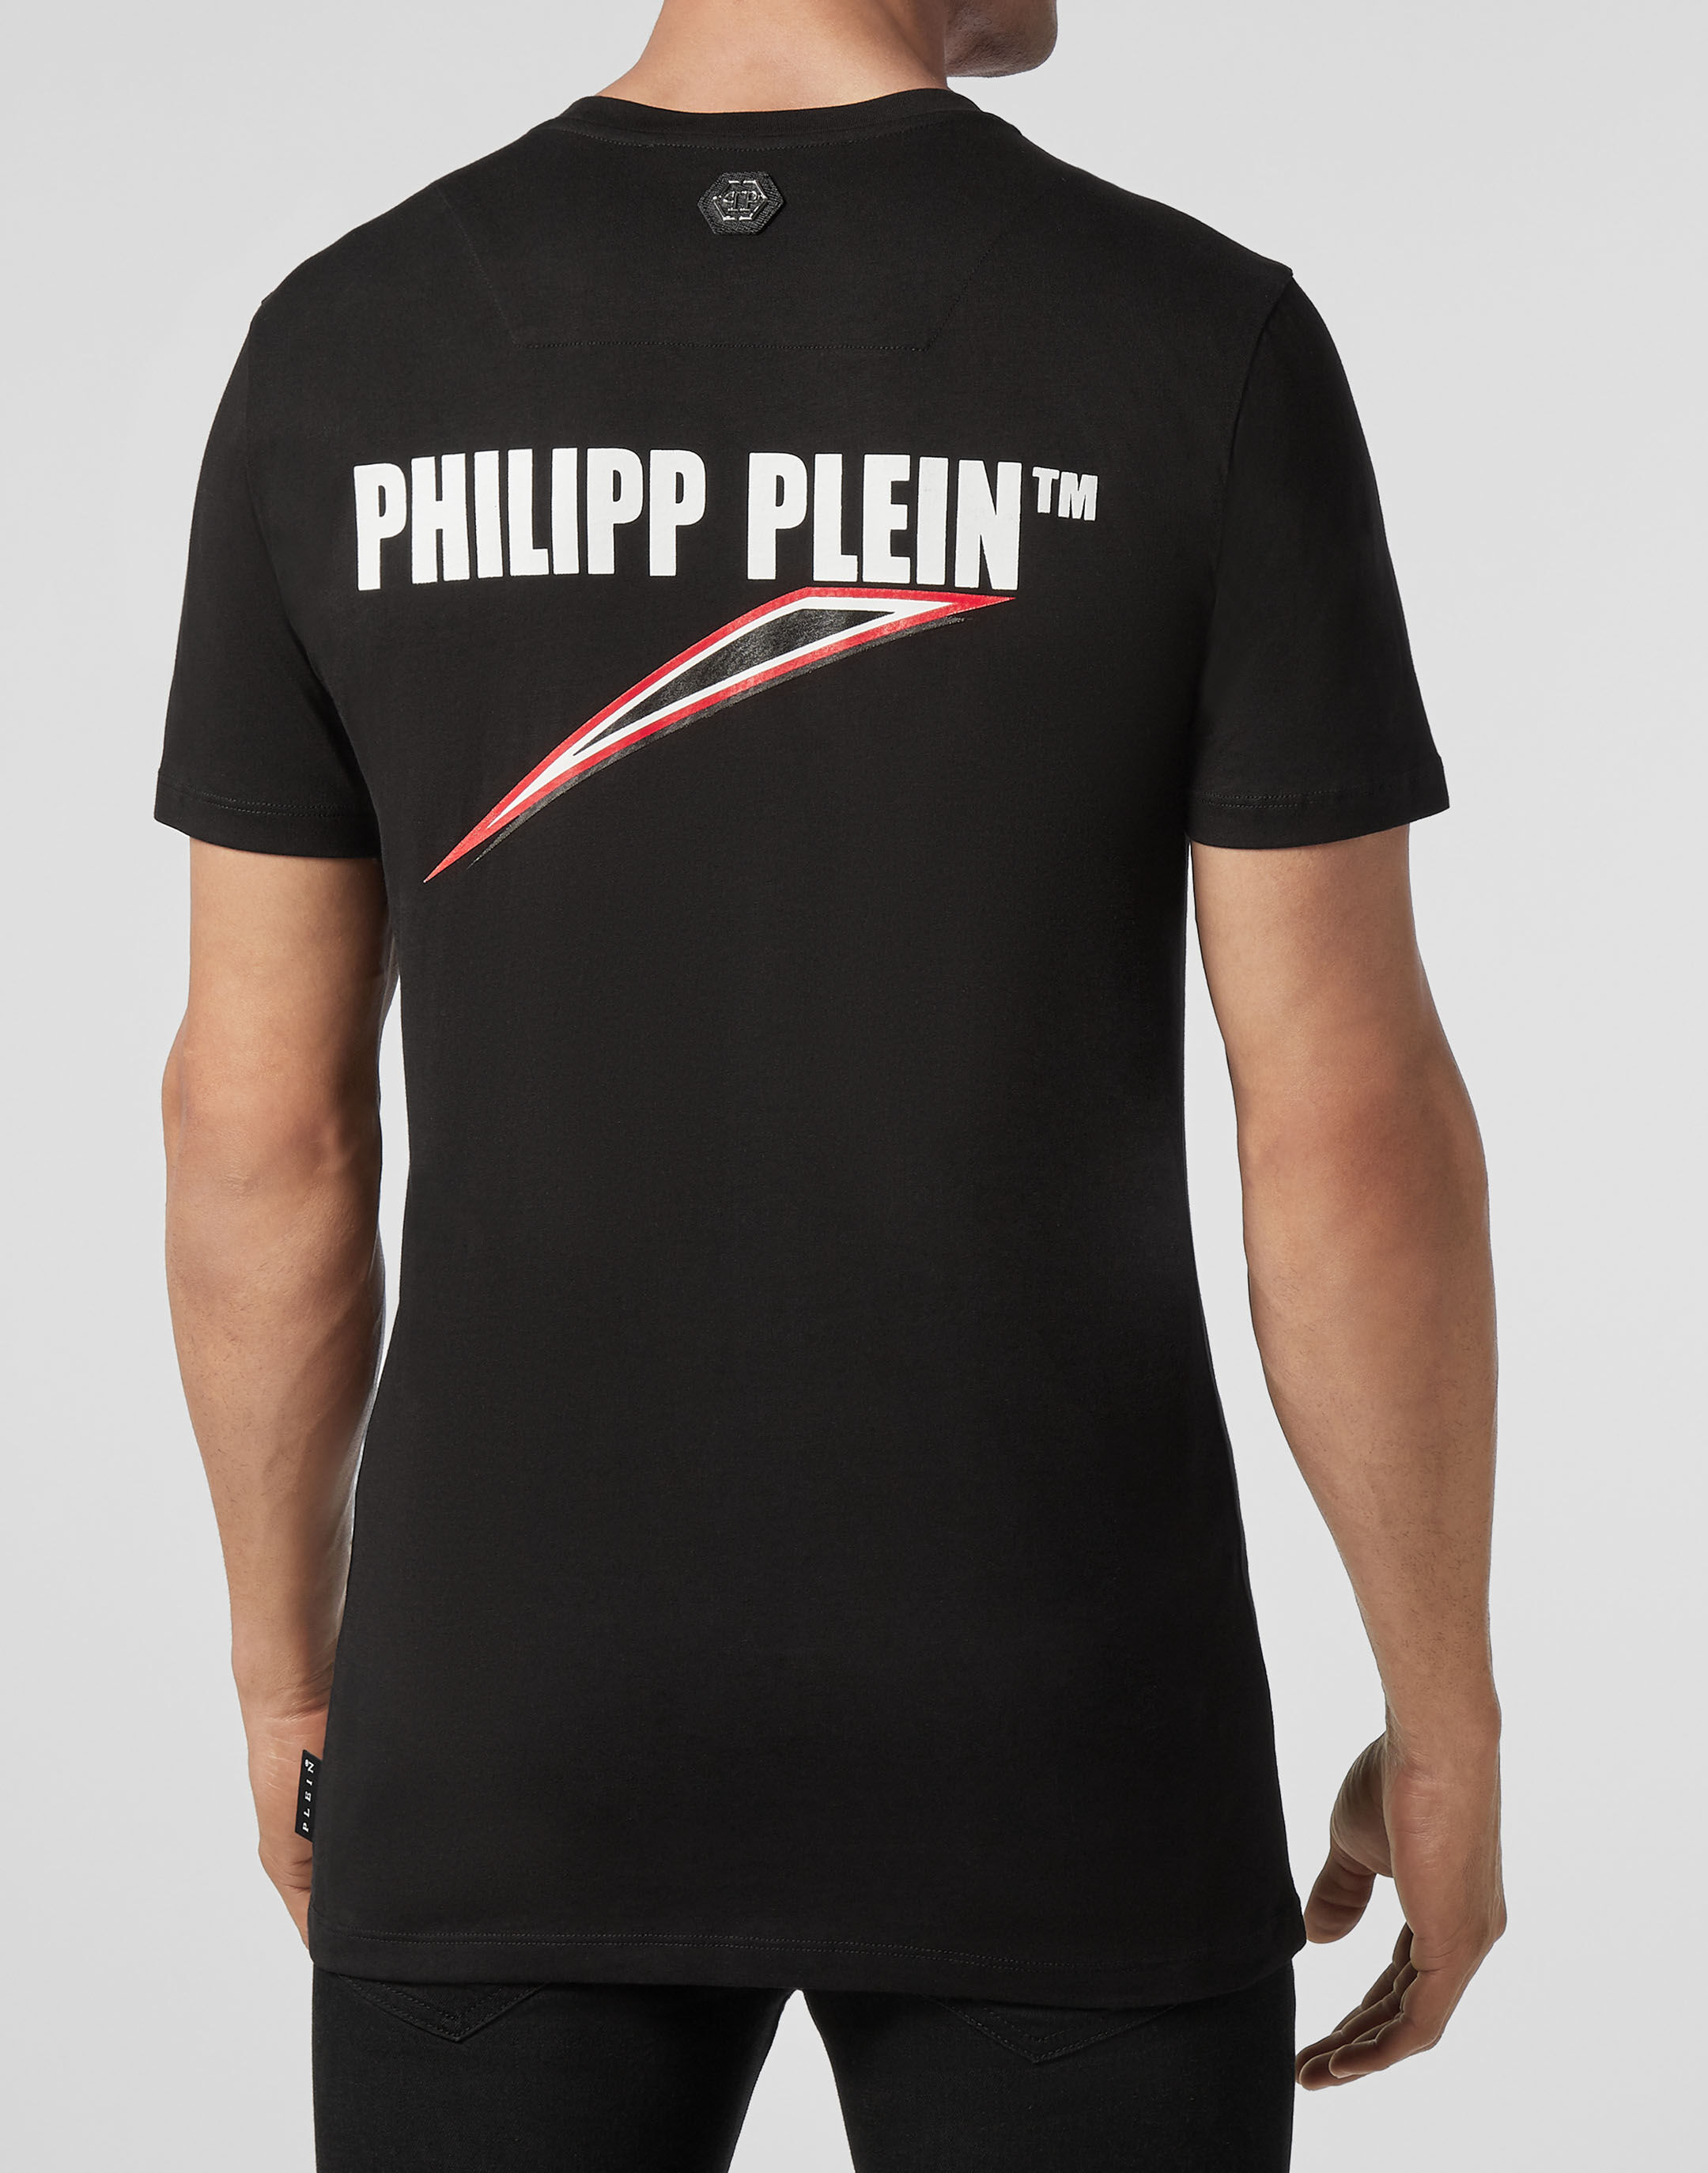 philipp plein golf shirts